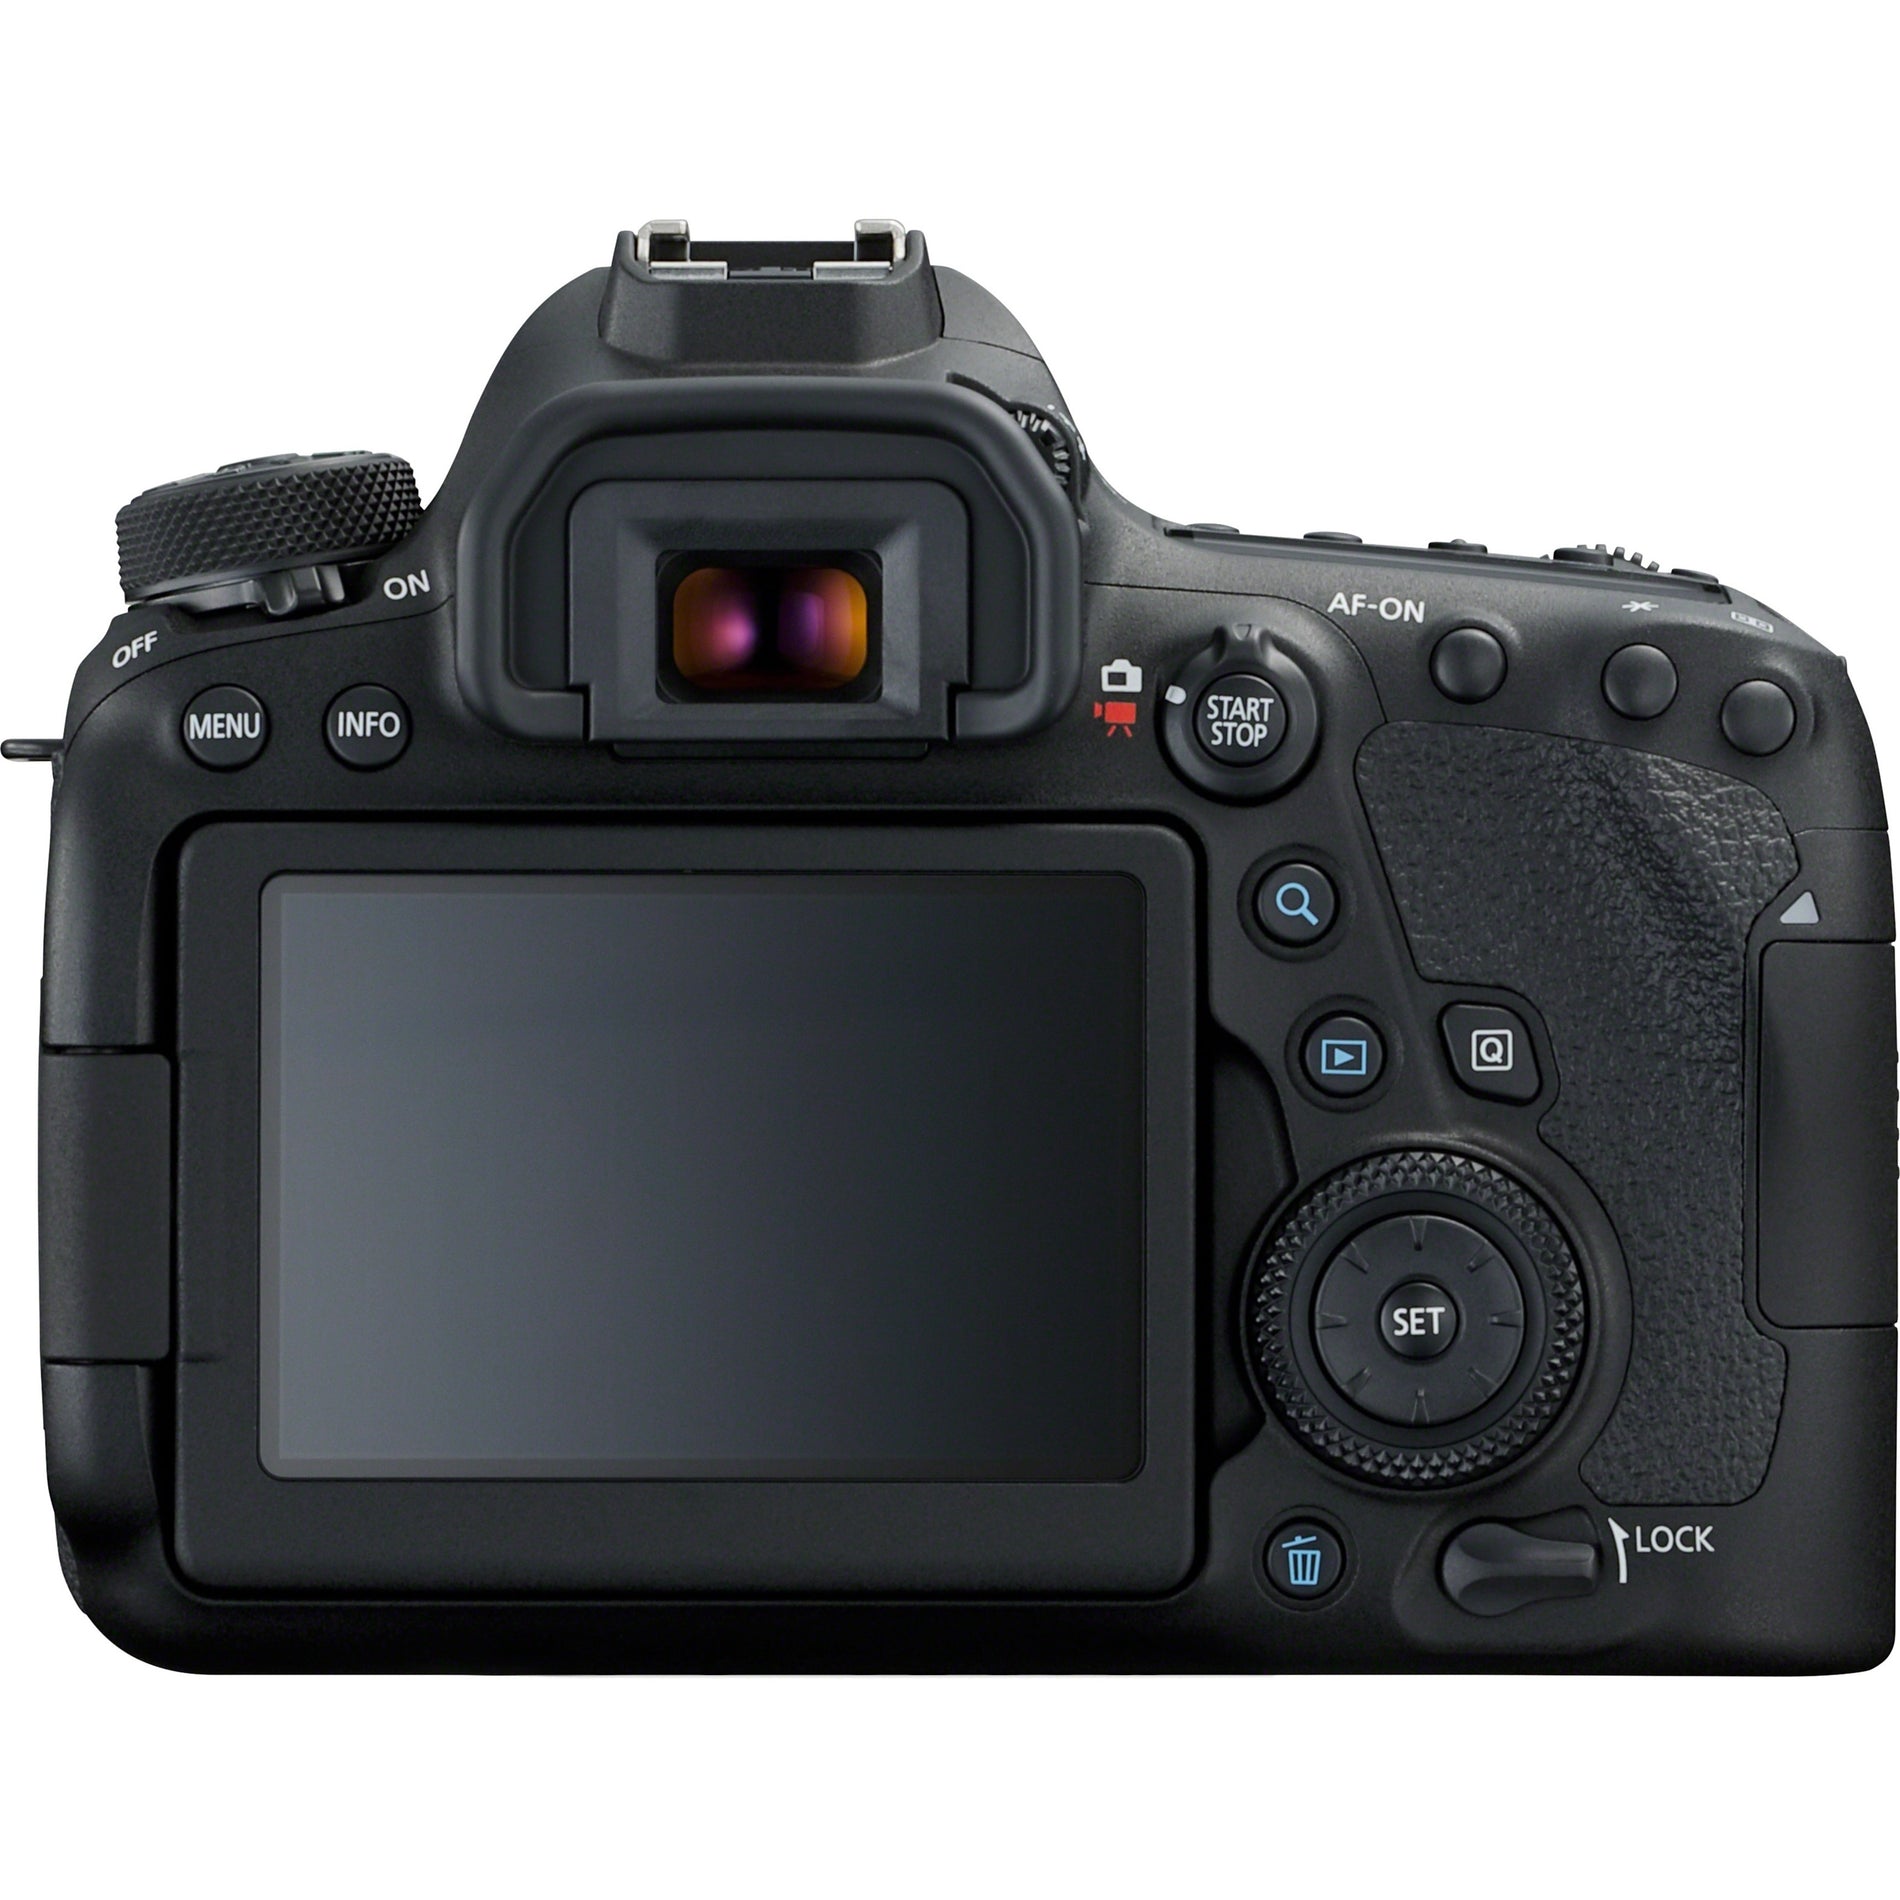 Canon 1897C009 EOS 6D Mark II Digital SLR Camera with Lens, 26.2 Megapixel, 4.4x Optical Zoom